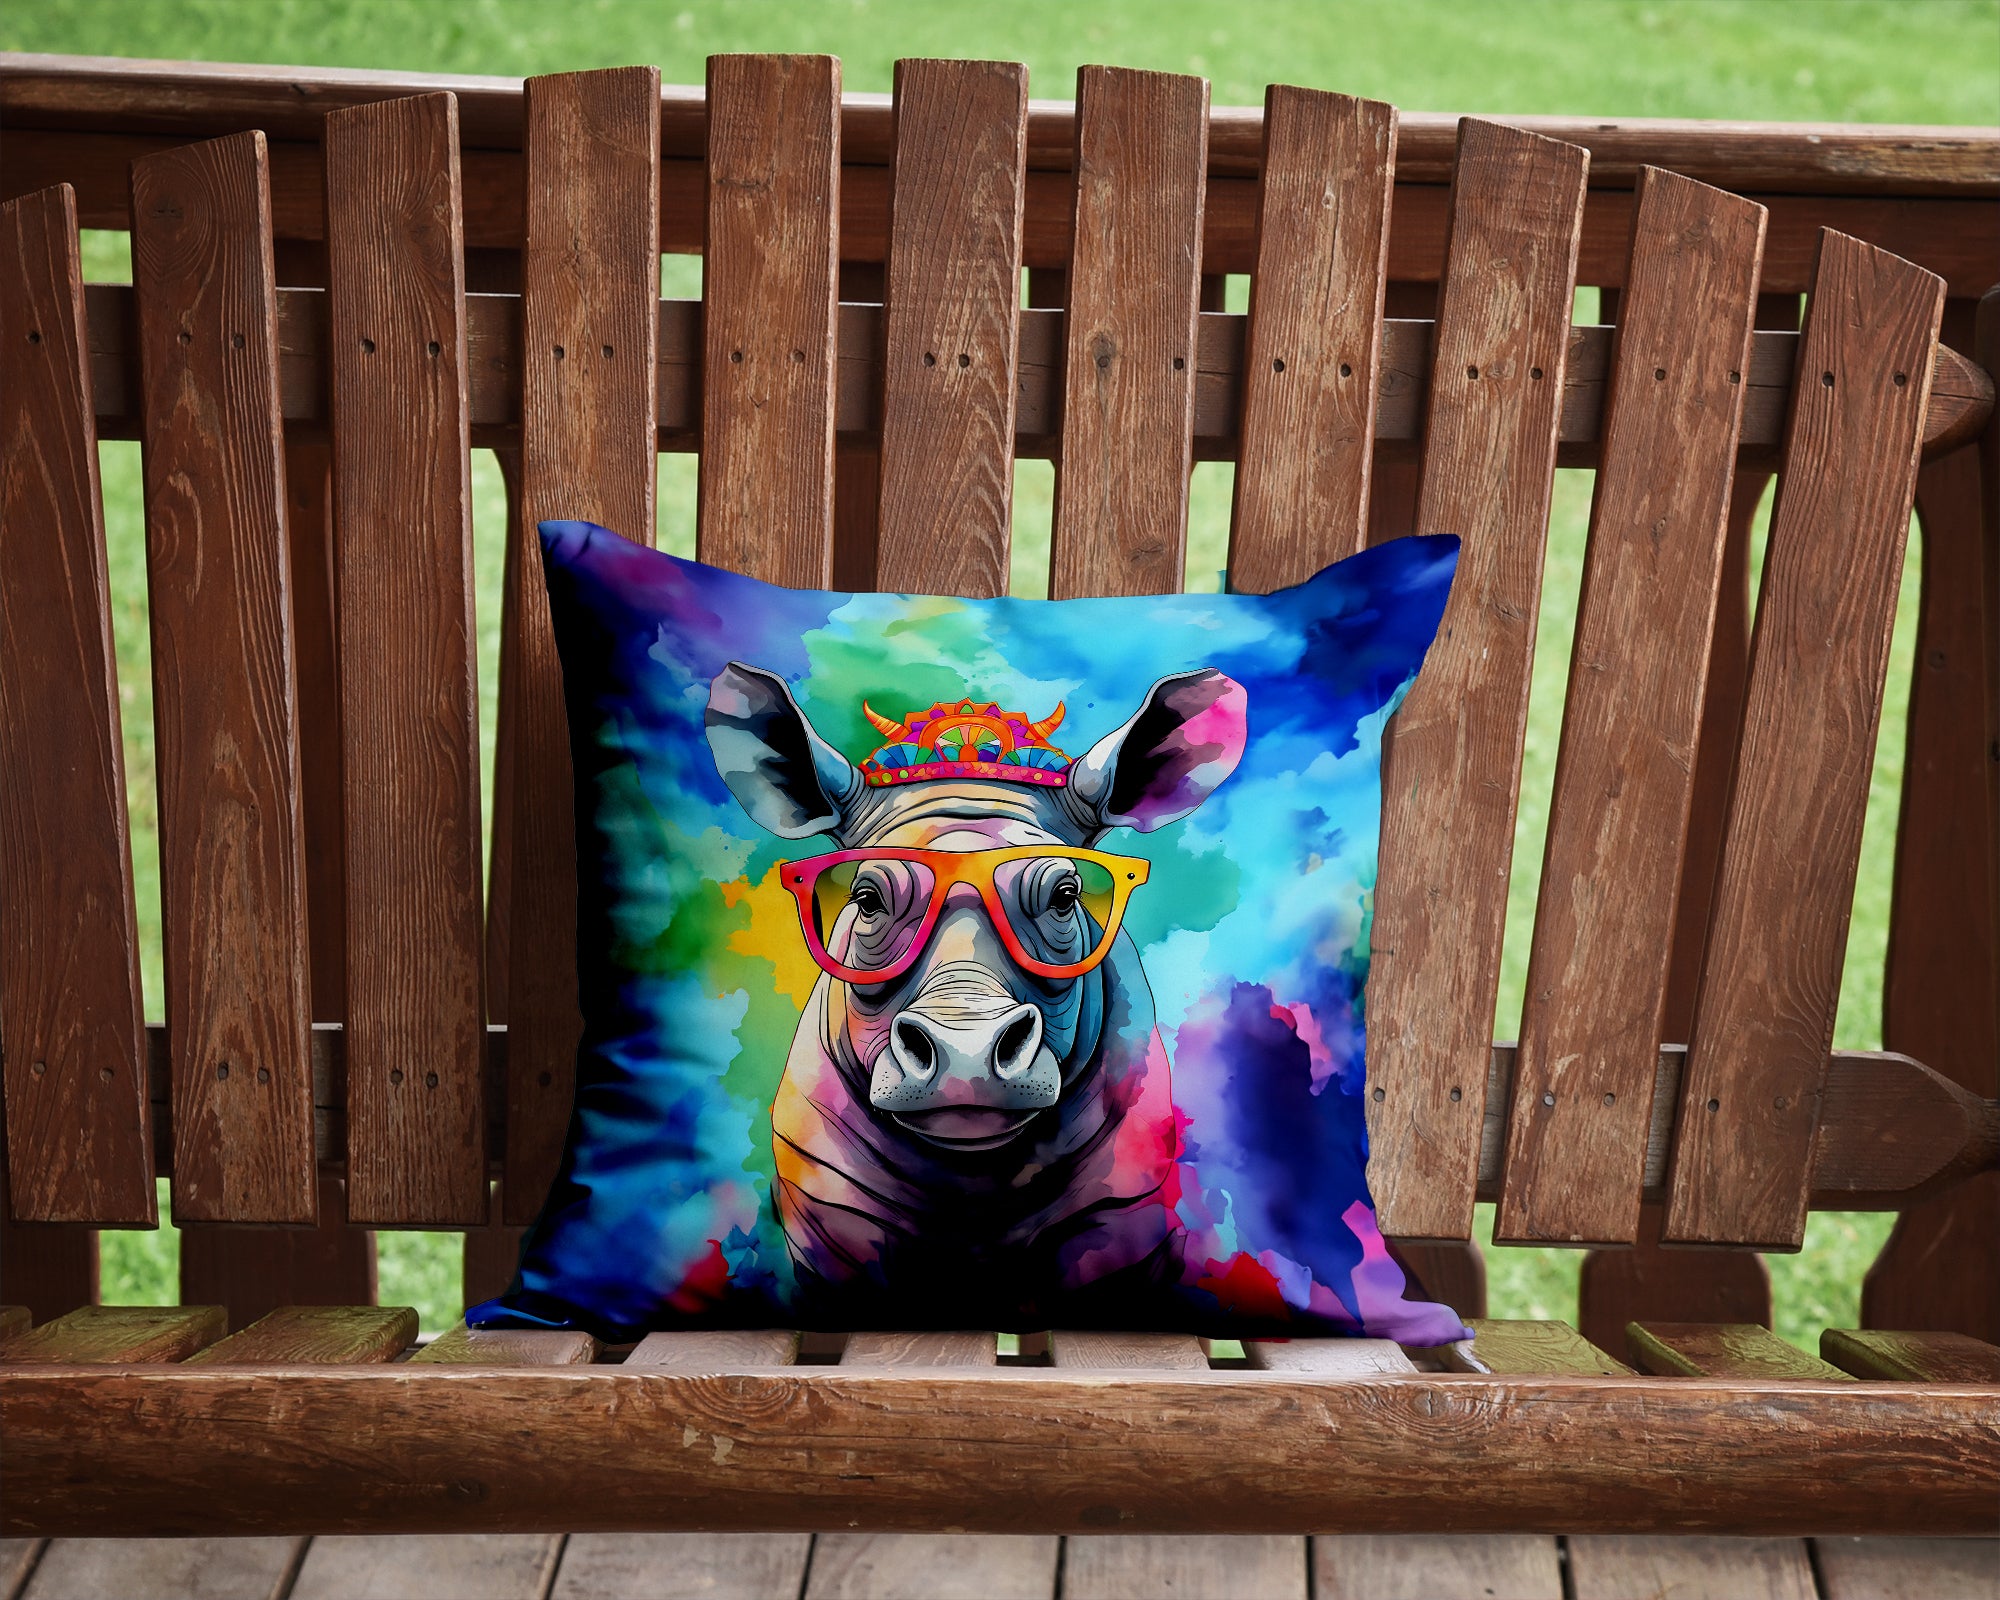 Buy this Hippie Animal Rhinoceros Throw Pillow